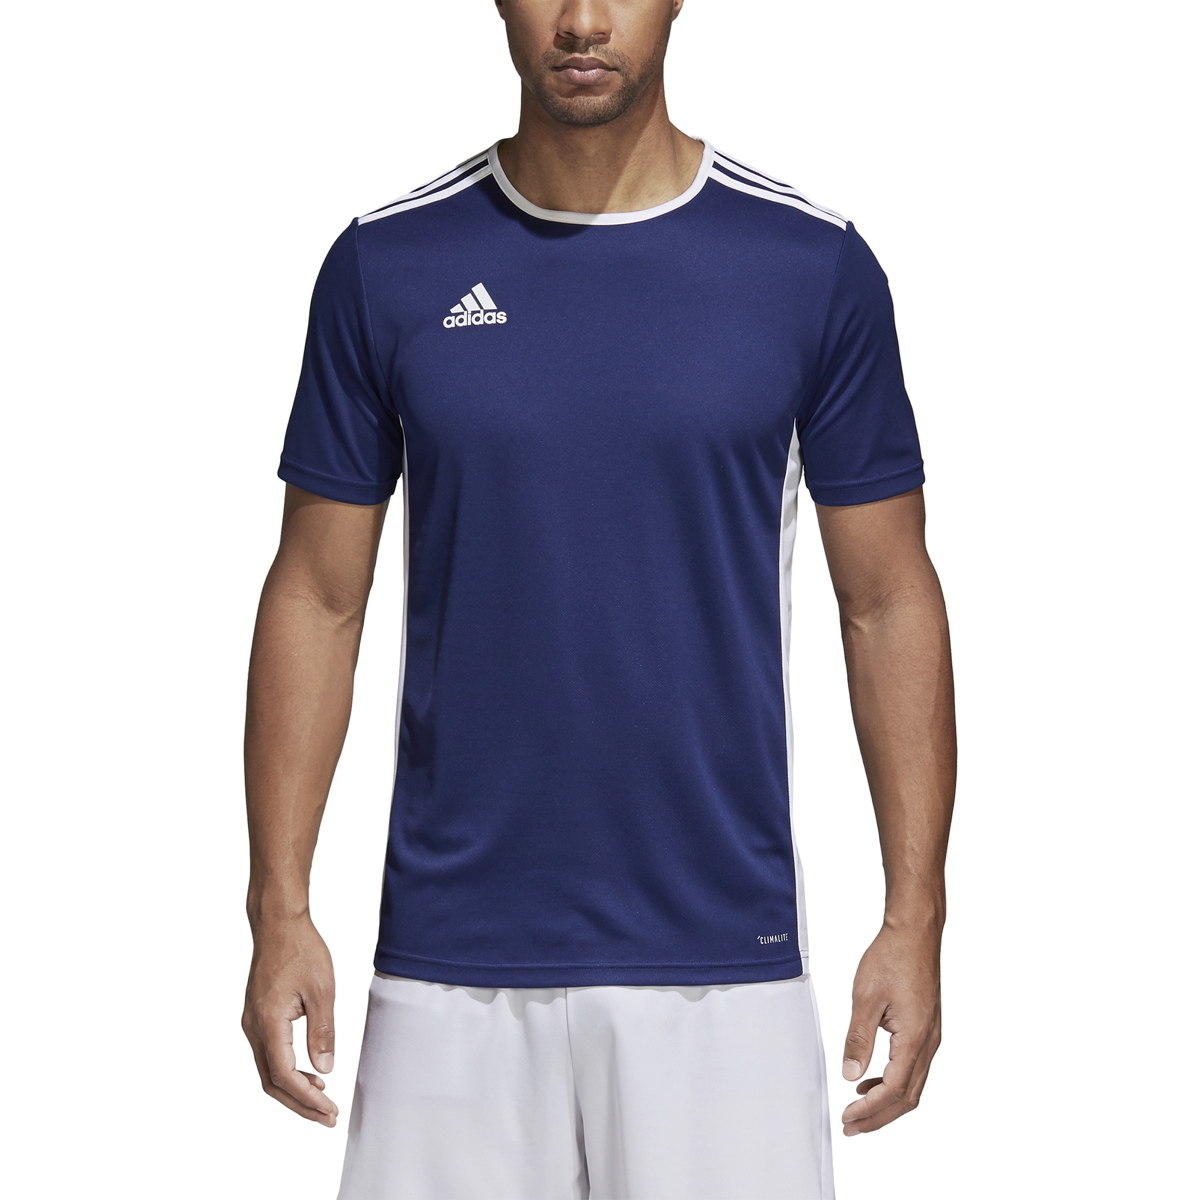 Adidas DARK BLUE/WHITE Men's Entrada ClimaLite Soccer Shirt, US Small - image 1 of 6